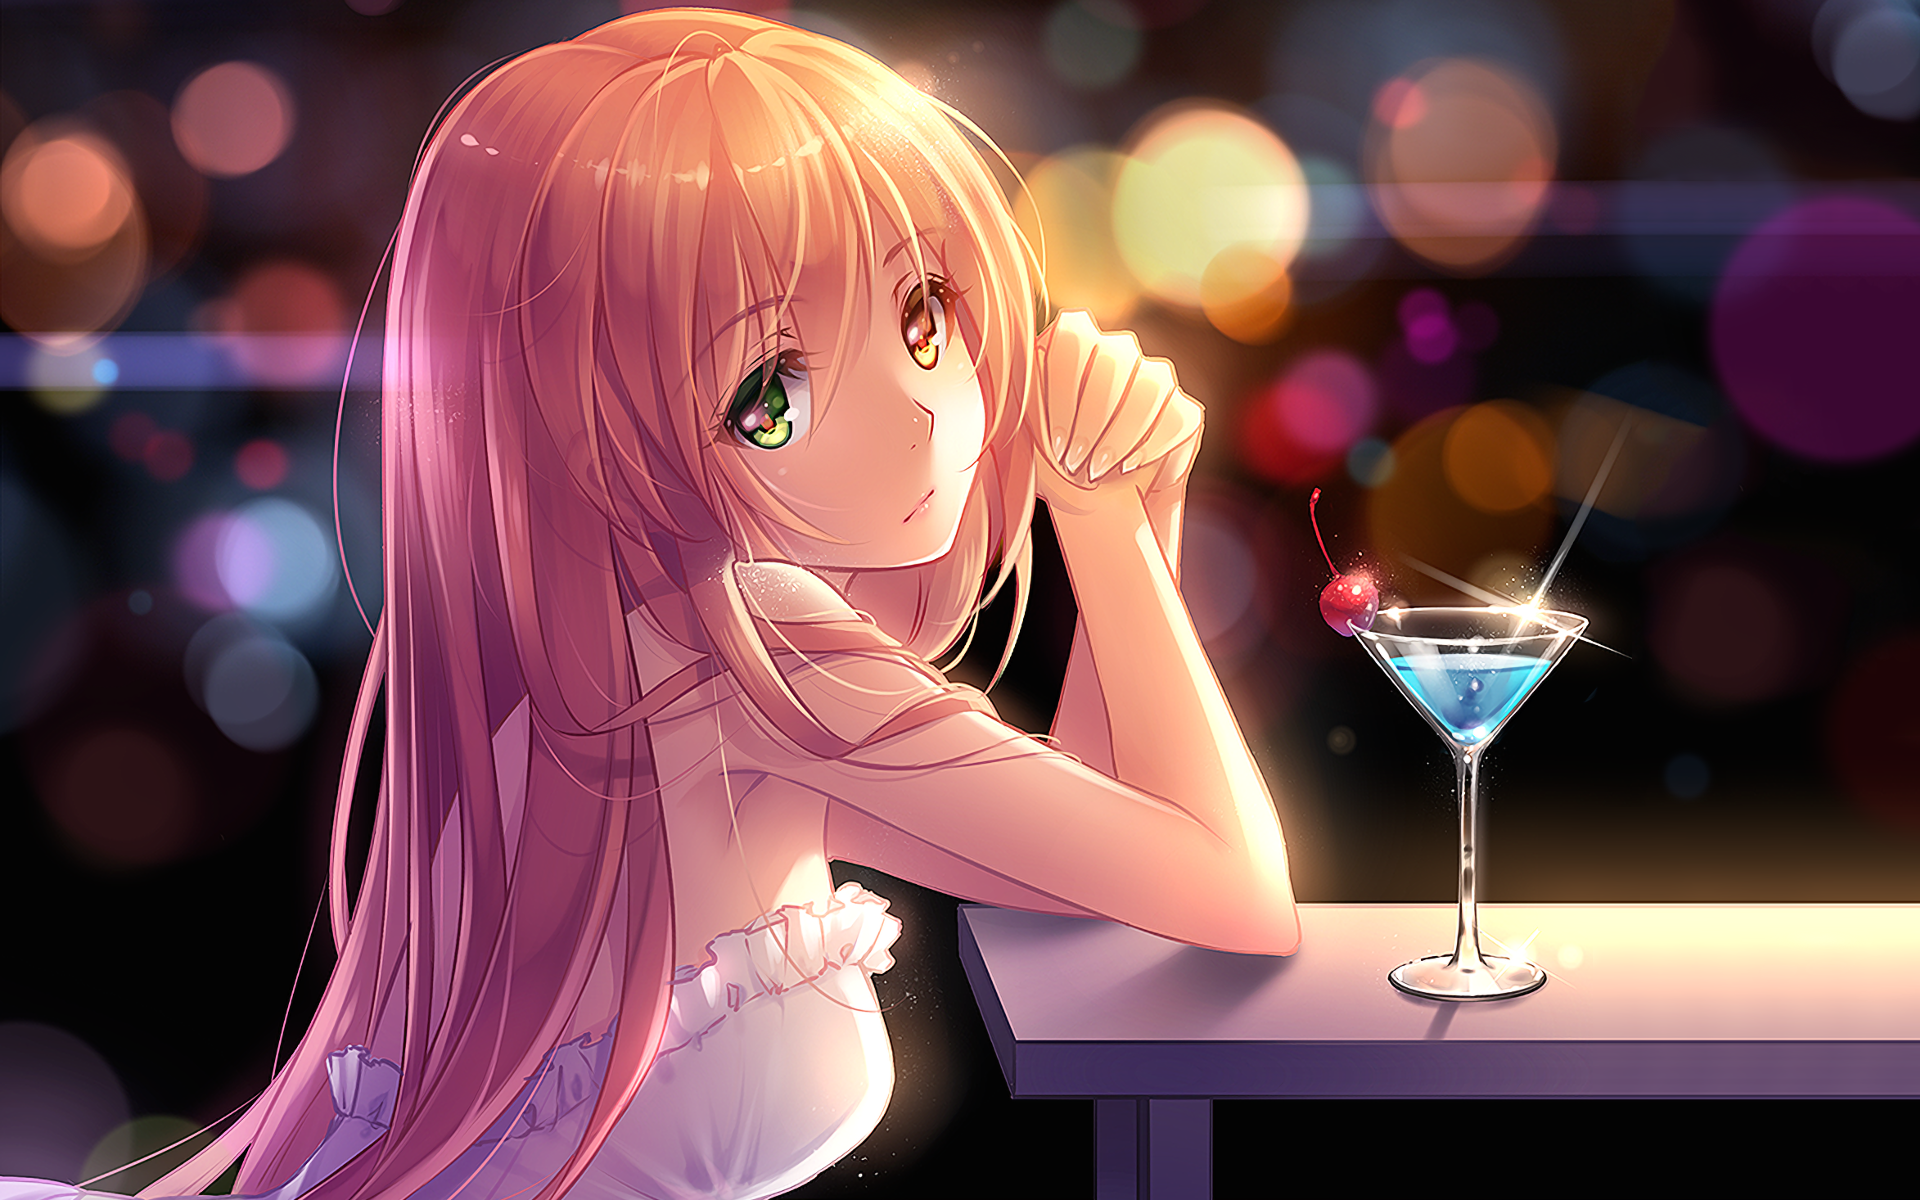 Anime 1920x1200 anime anime girls long hair drinking glass Niya looking at viewer heterochromia cocktails food drink cherries cropped Tidsean